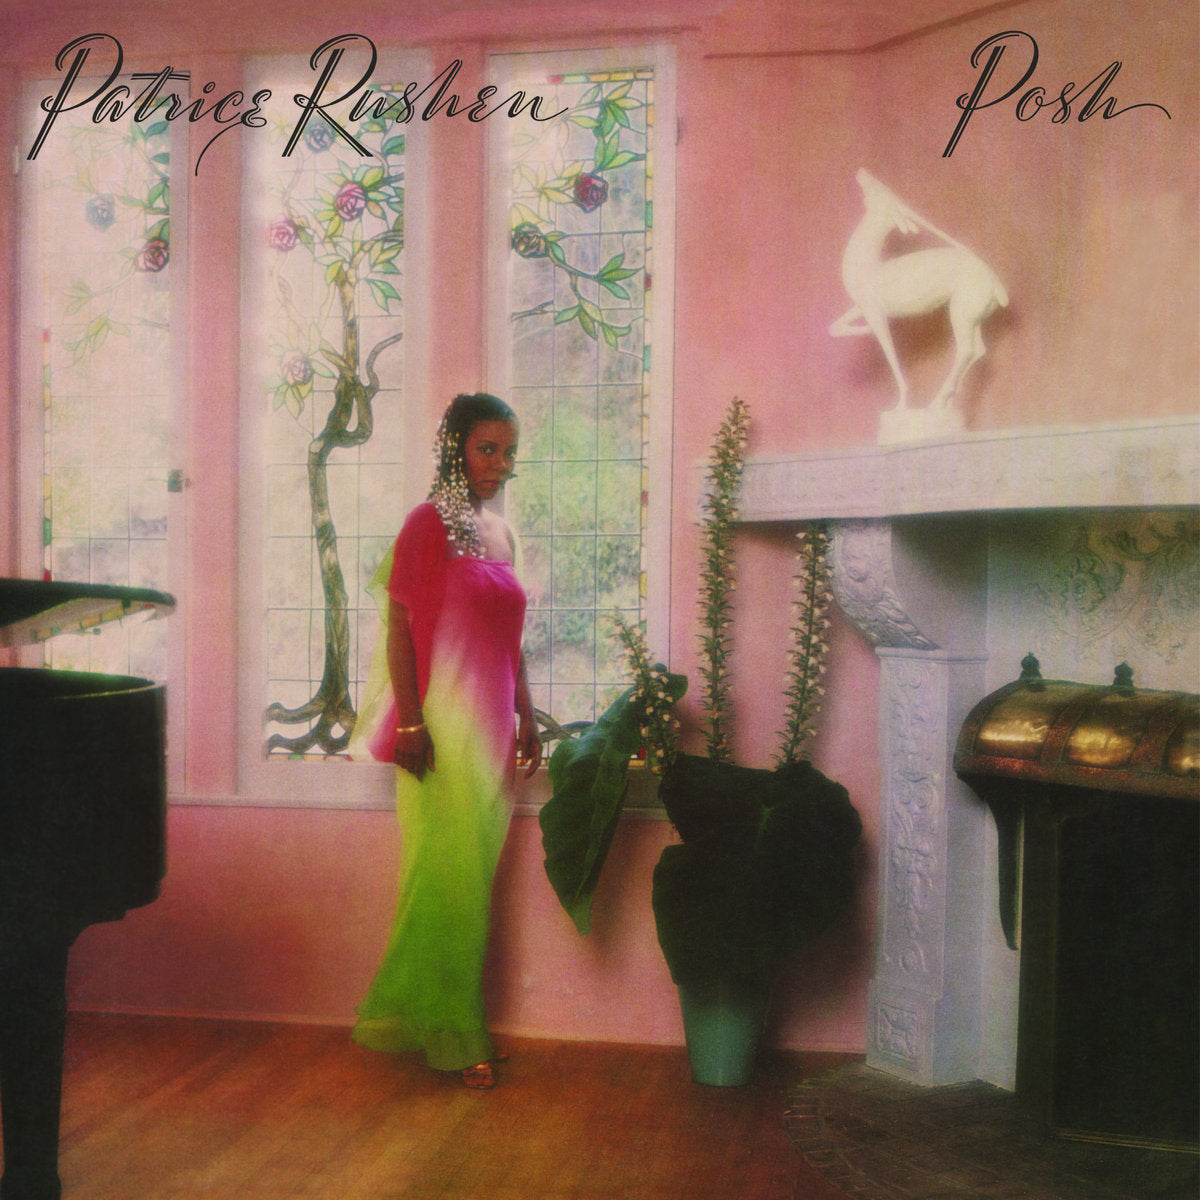 Patrice Rushen - Posh - LP